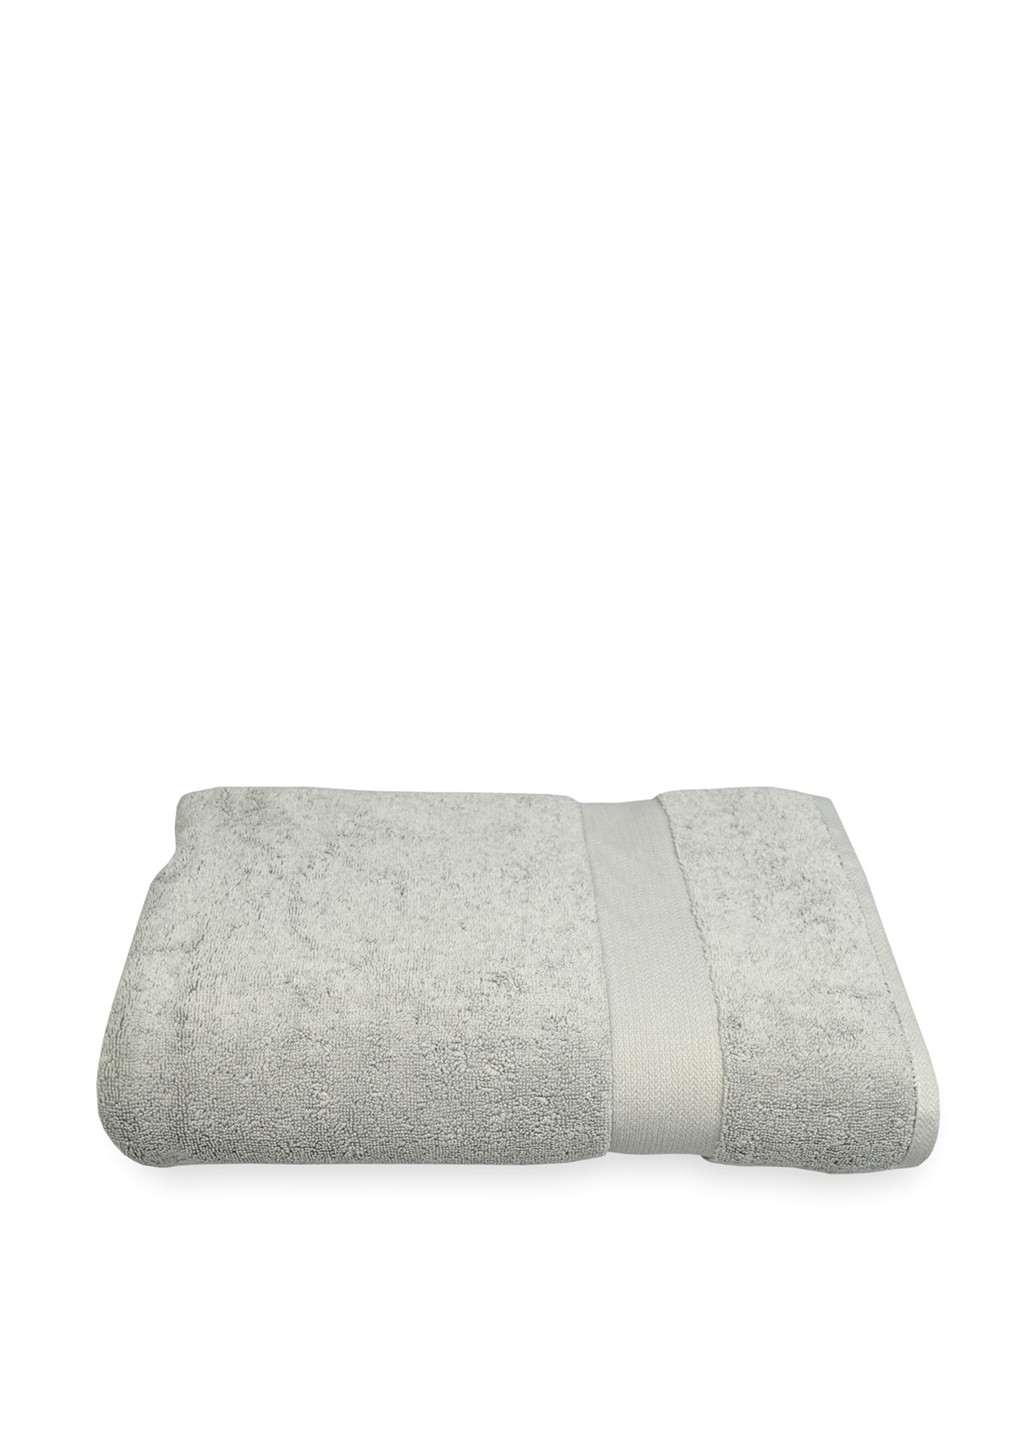 No Brand полотенце, 70х140 см однотонный серый производство - Турция